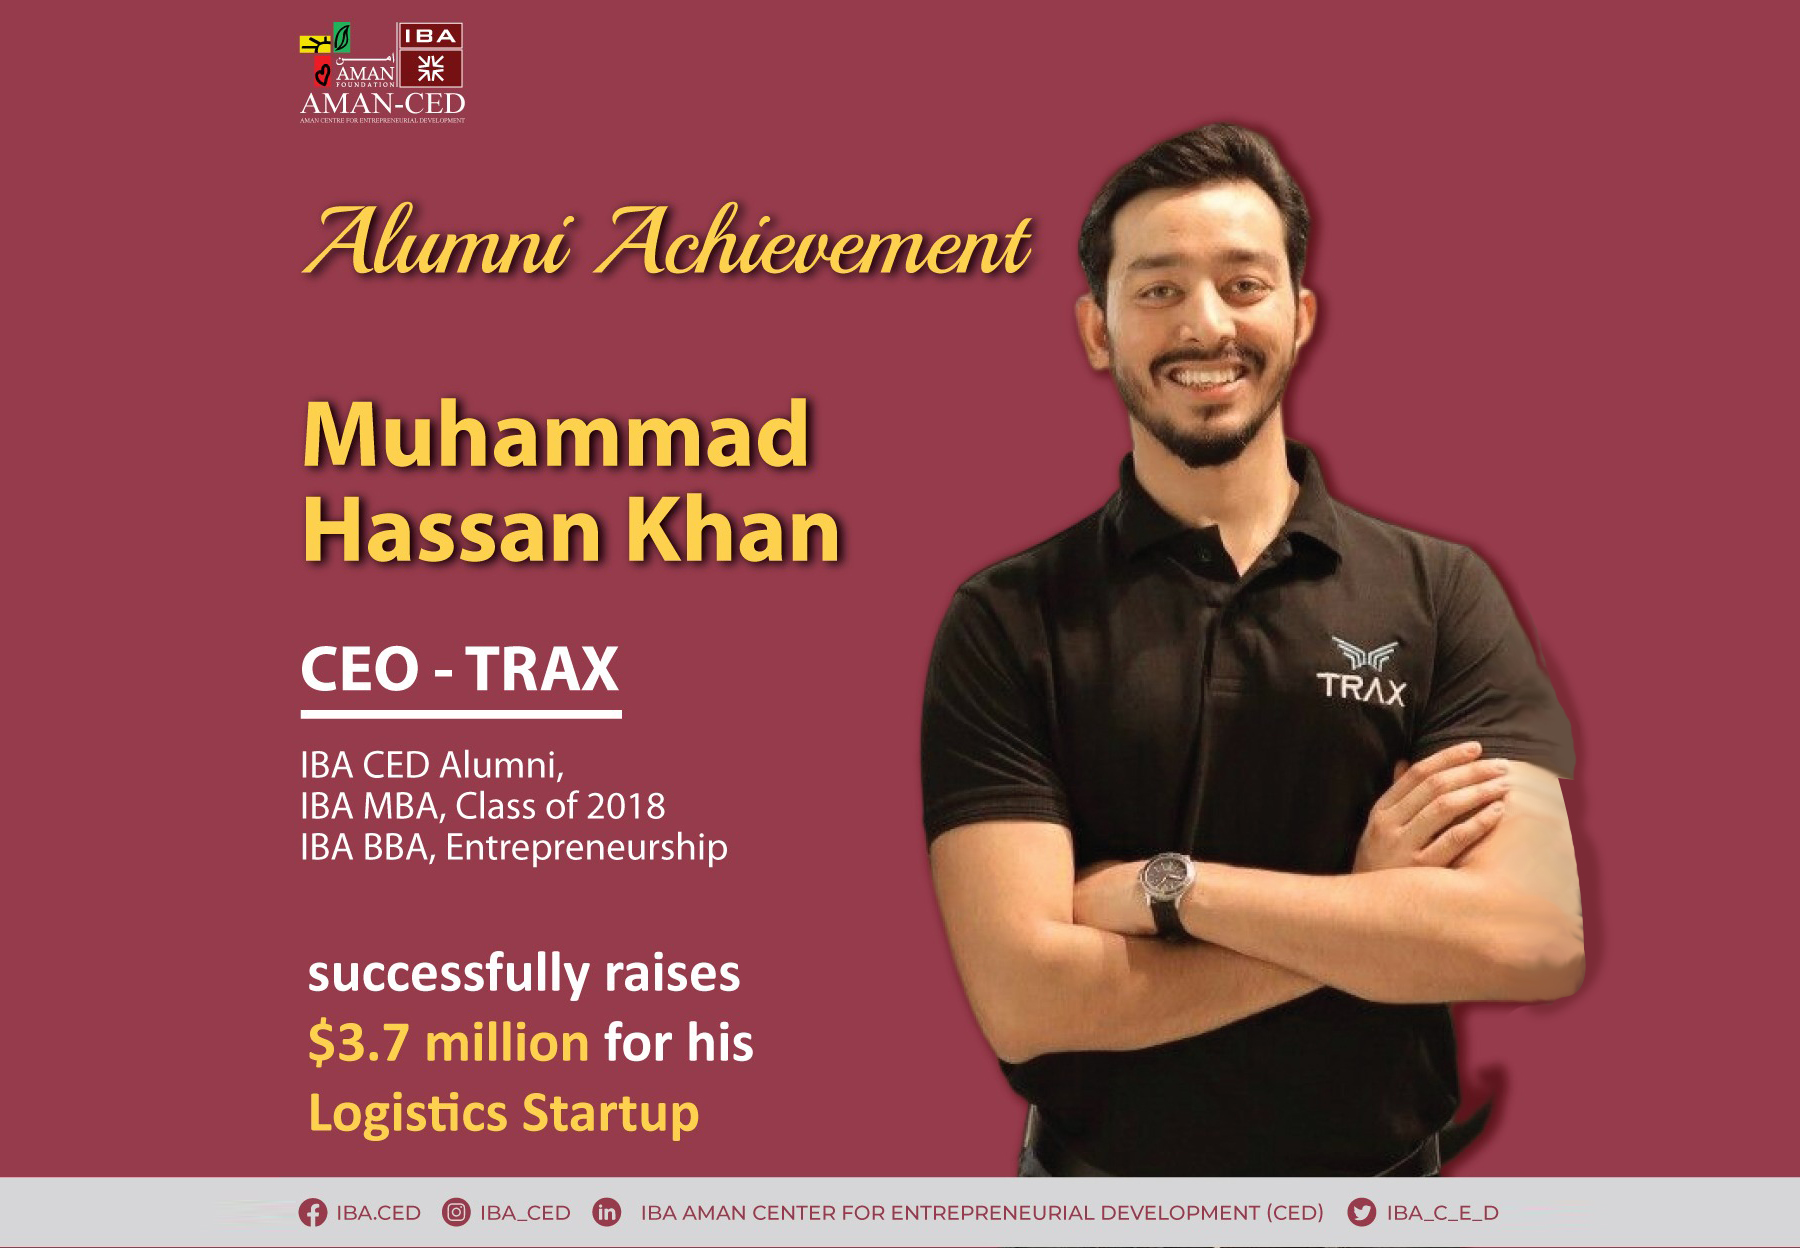 IBA Alumni Mr. M Hassan Khan raised $3.7 million seed funding for Trax Logisitics